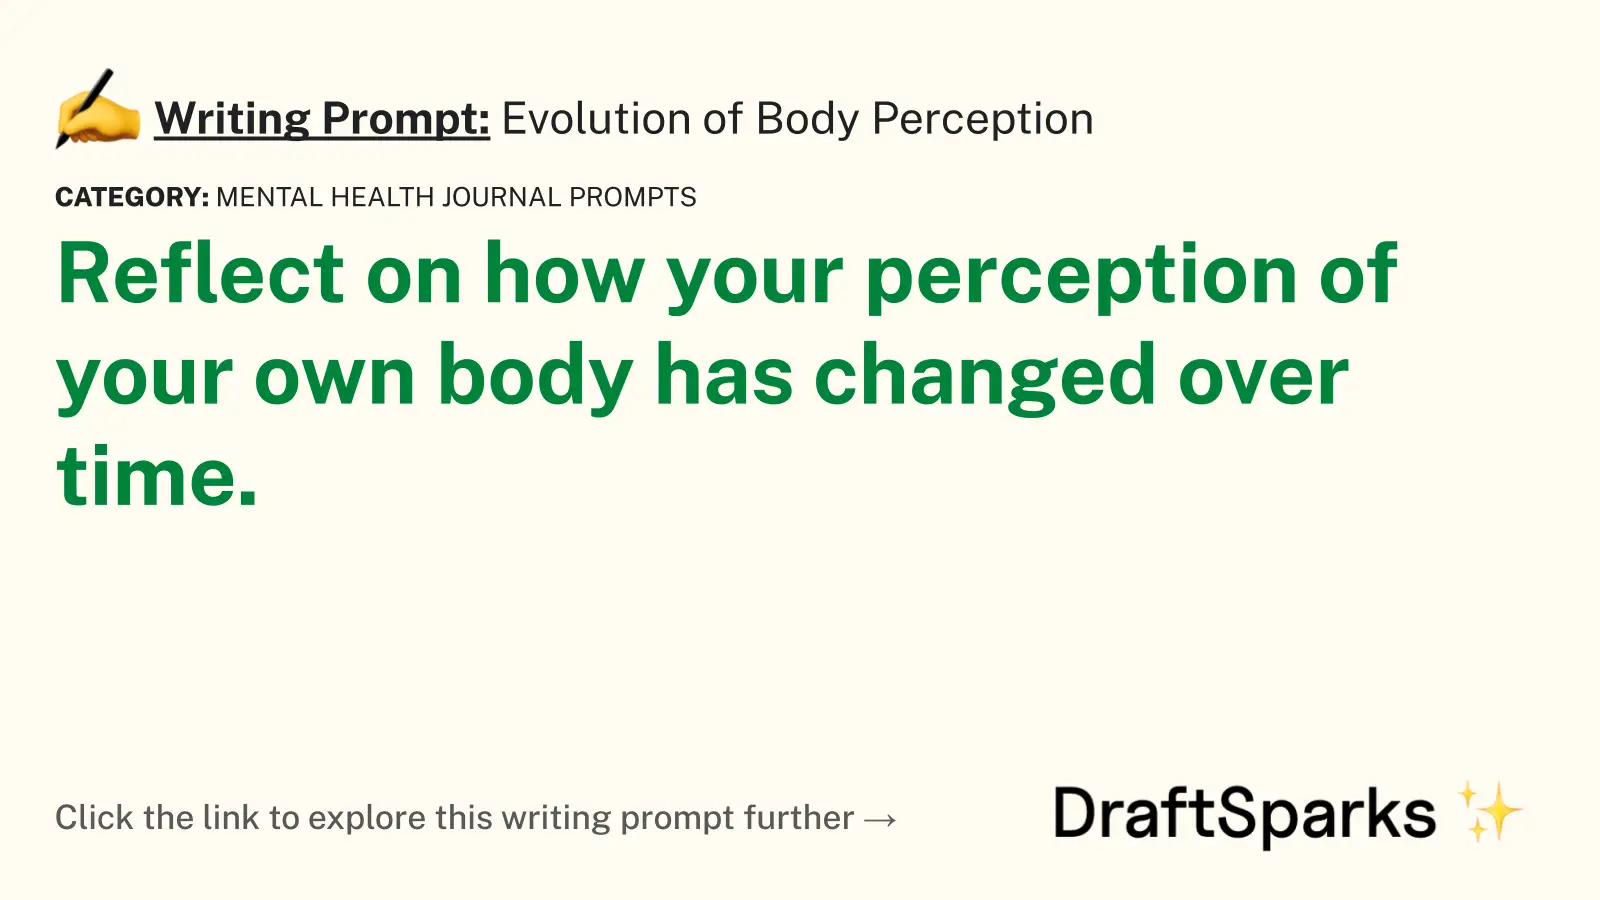 Evolution of Body Perception